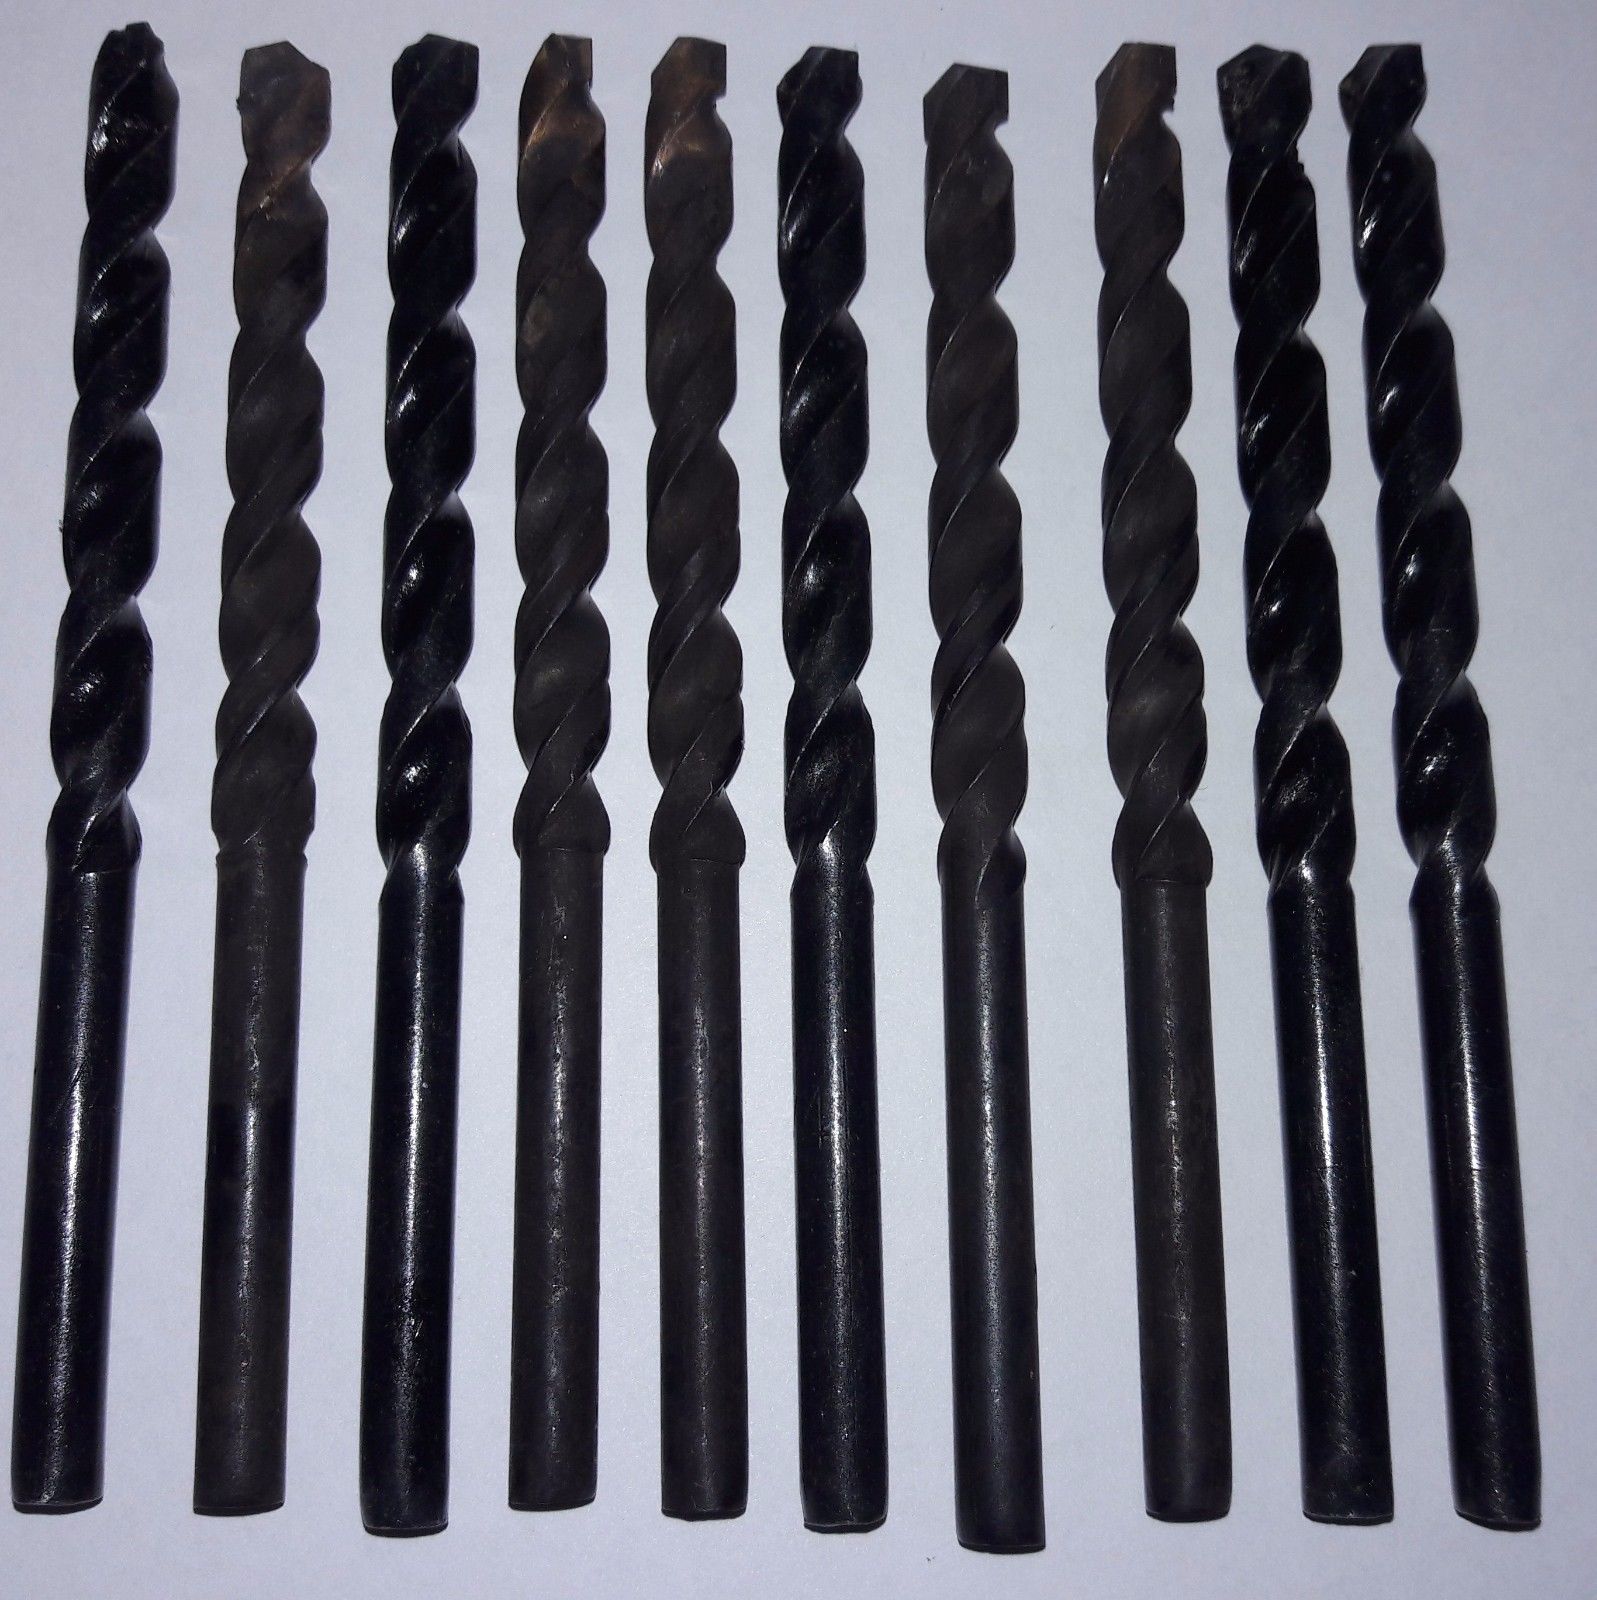 Vermont American 2608682618 1/4" x 4" MDB Carbide Tip Masonry Drill Bits (10PCS)